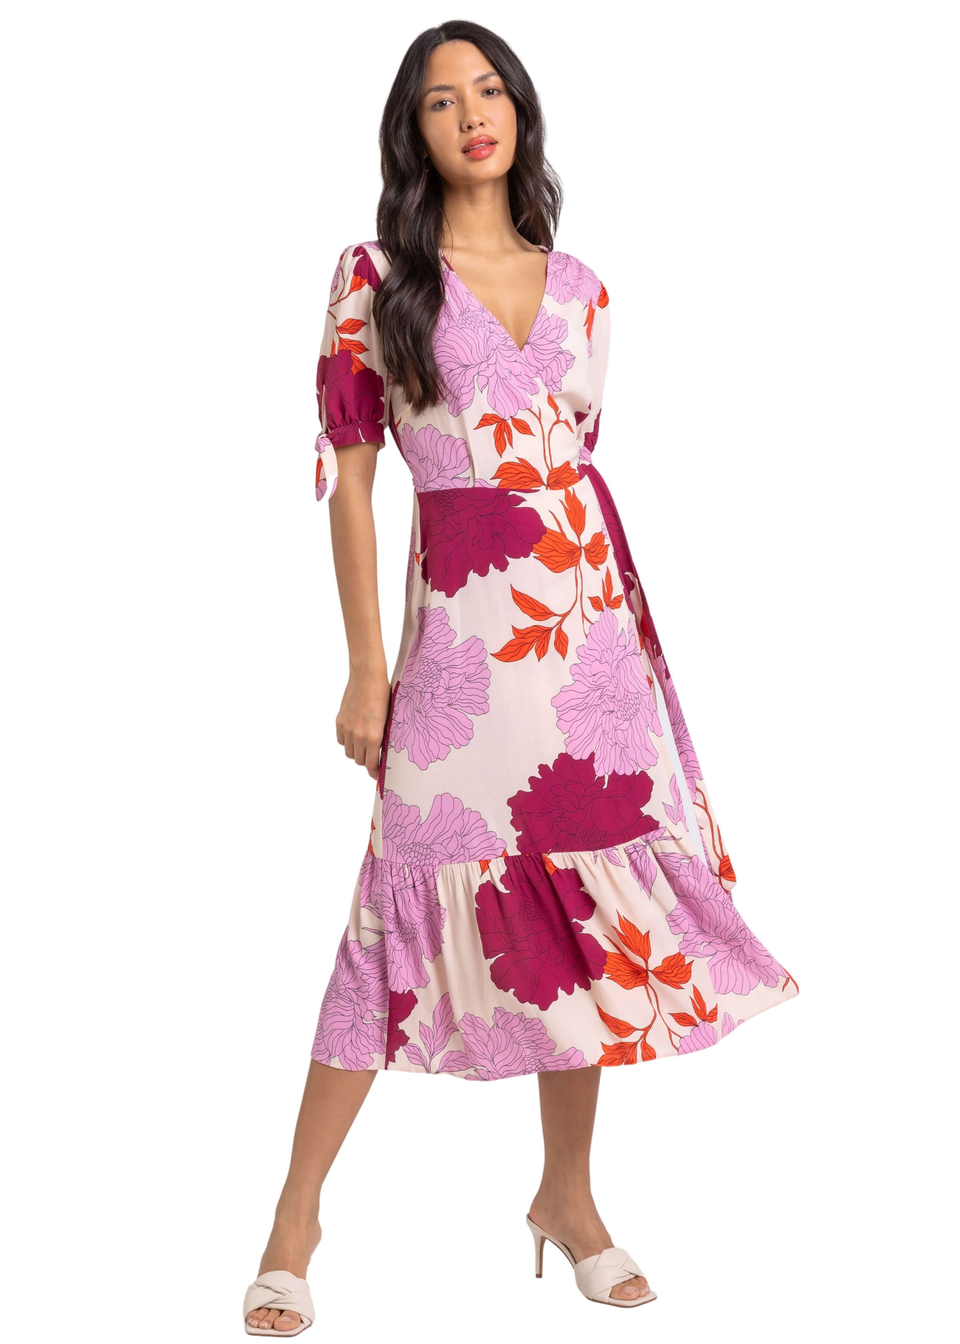 Roman Mauve Floral Frill Hem Wrap Midi Dress